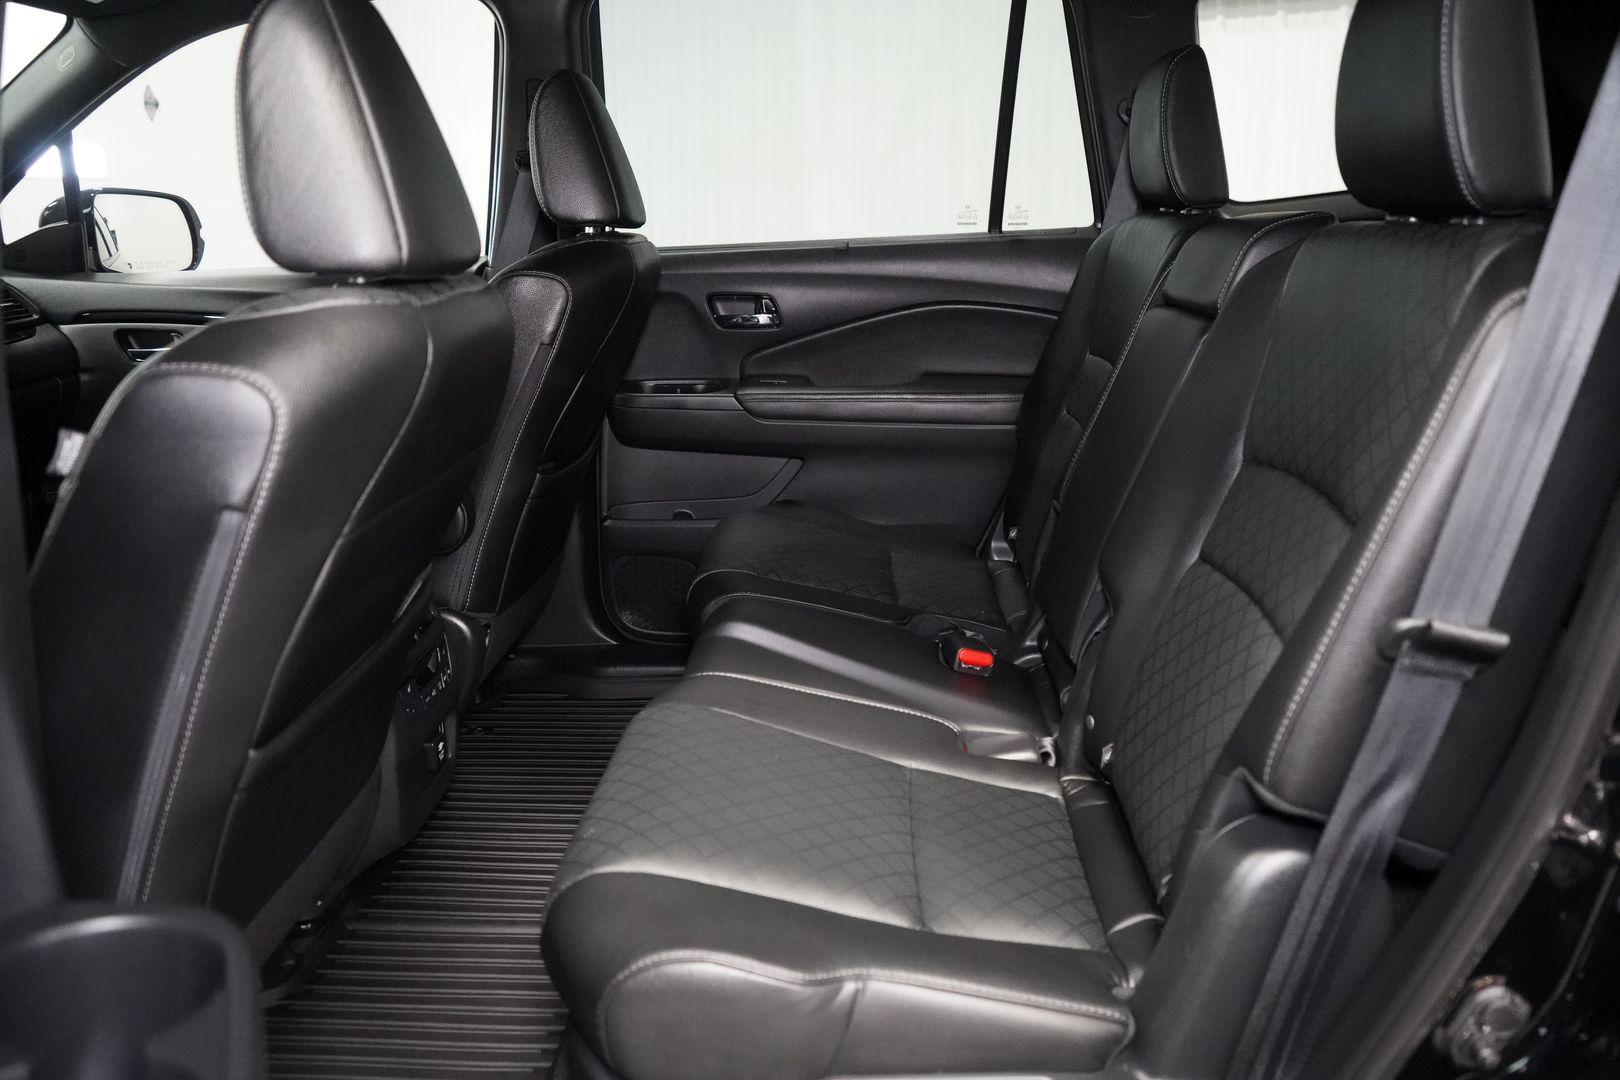 Bentley's Elite Magnum LX Seat